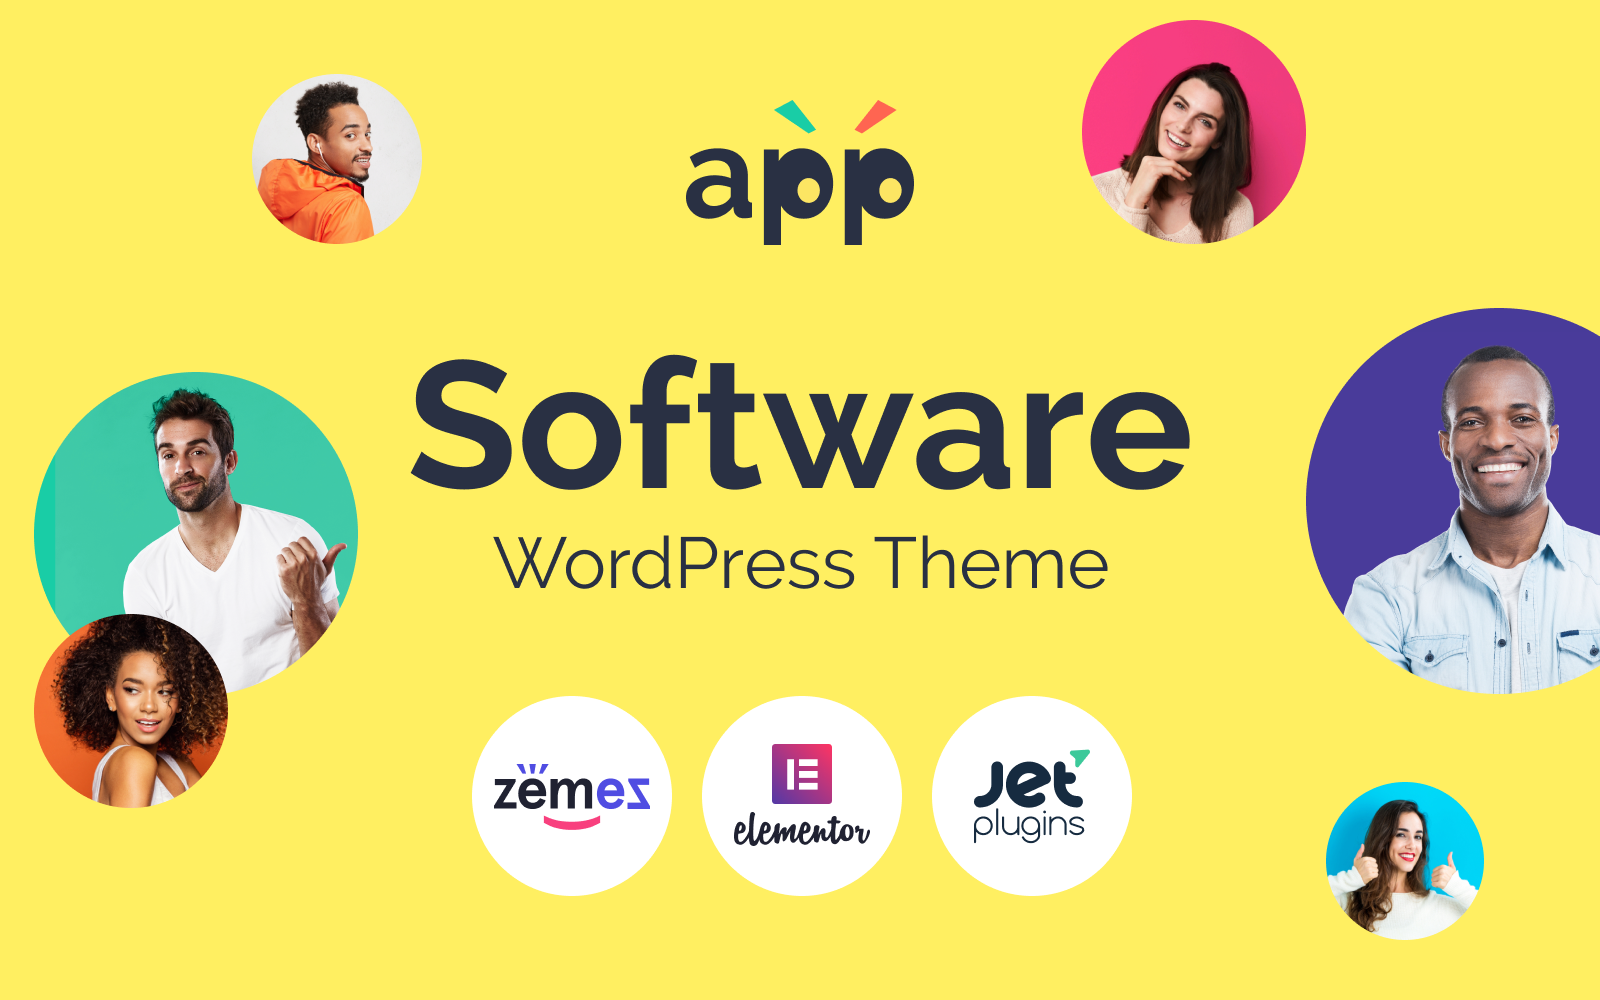 App - Software Template with Elementor Builder WordPress Theme